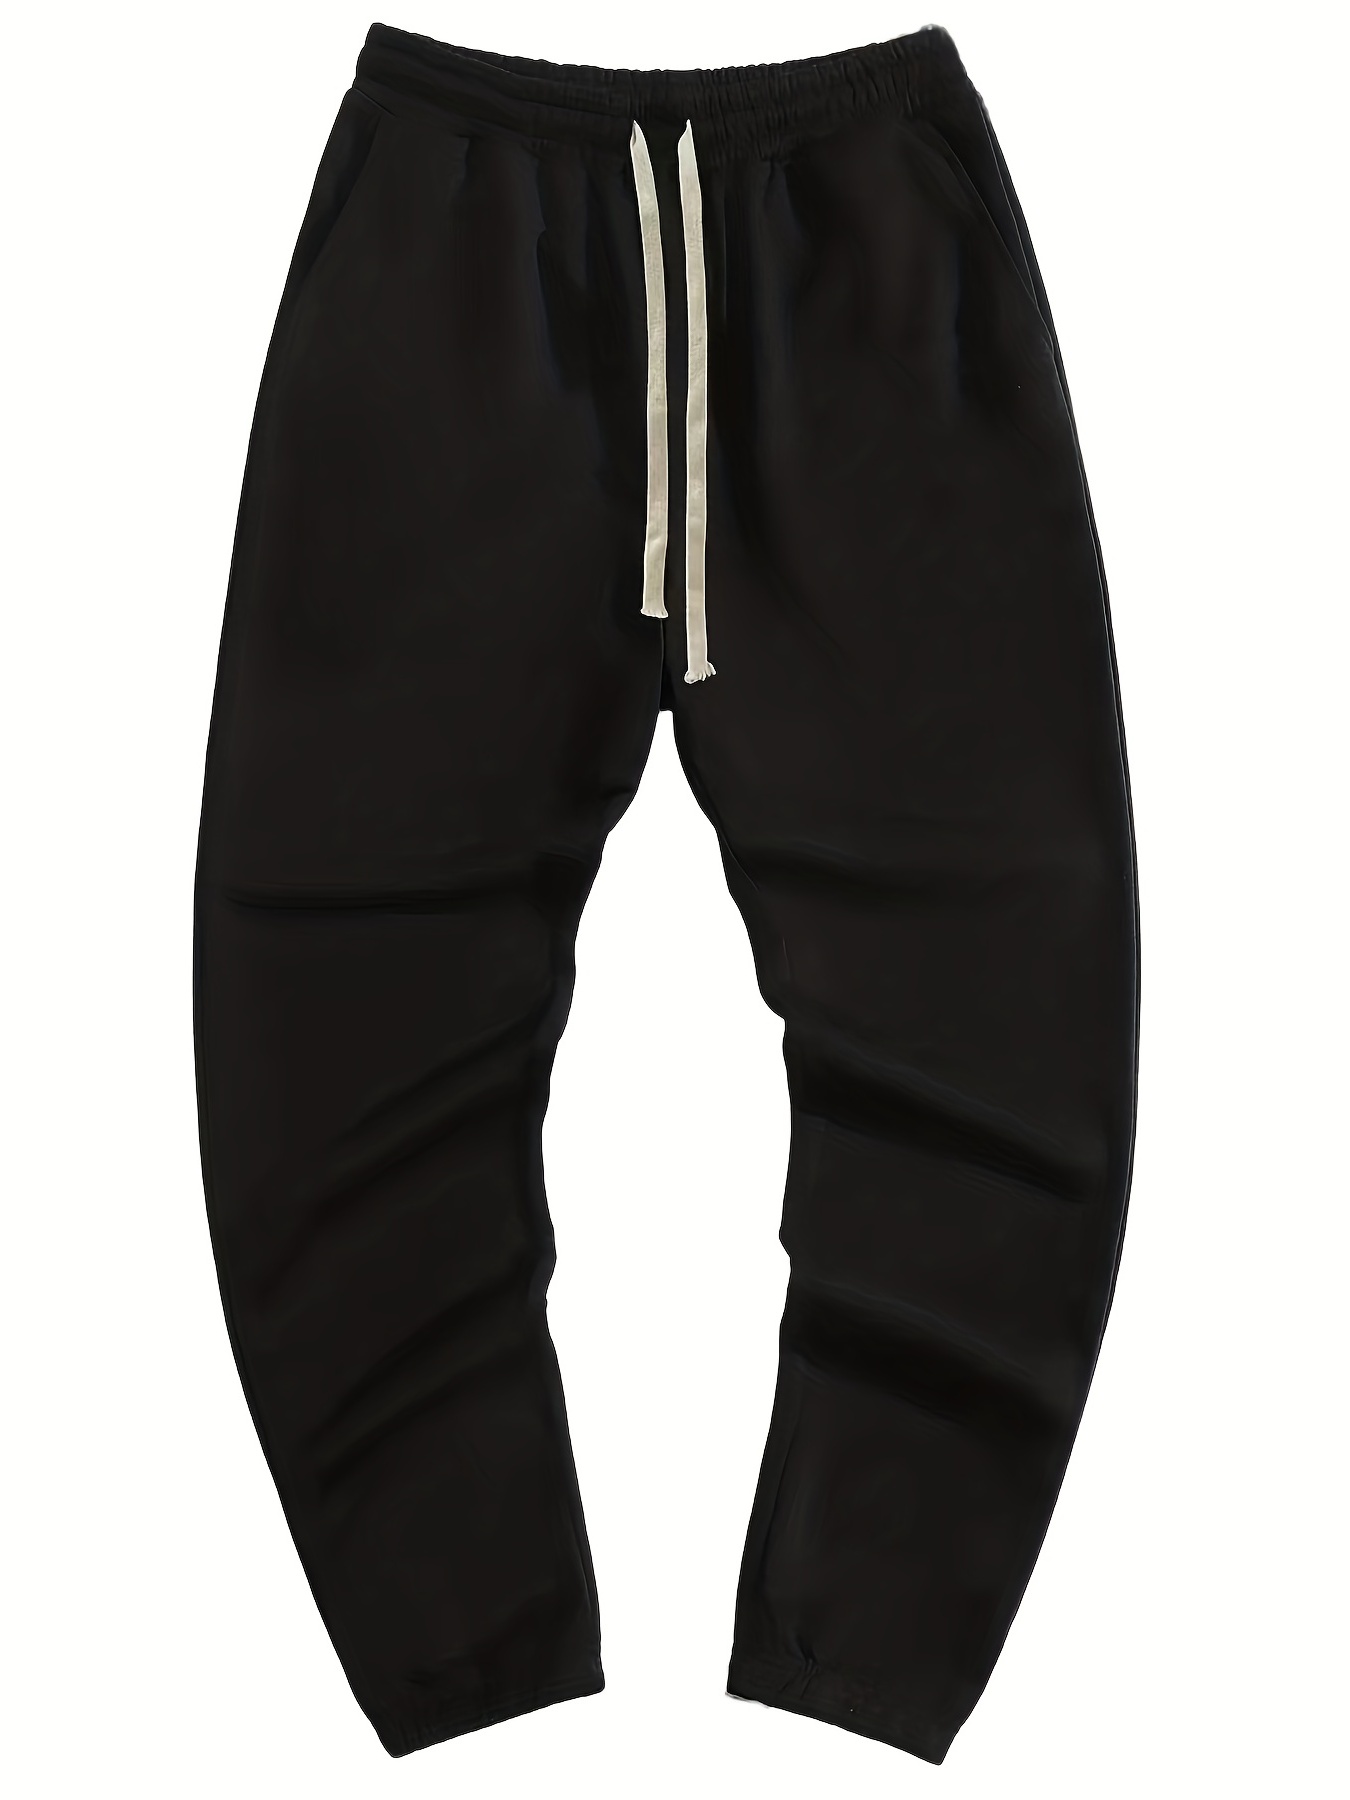 Black Sweatpants For Men Fashion Mens Solid Drawstring Pocket Sports  Trousers Casual Beam Feet Pants 